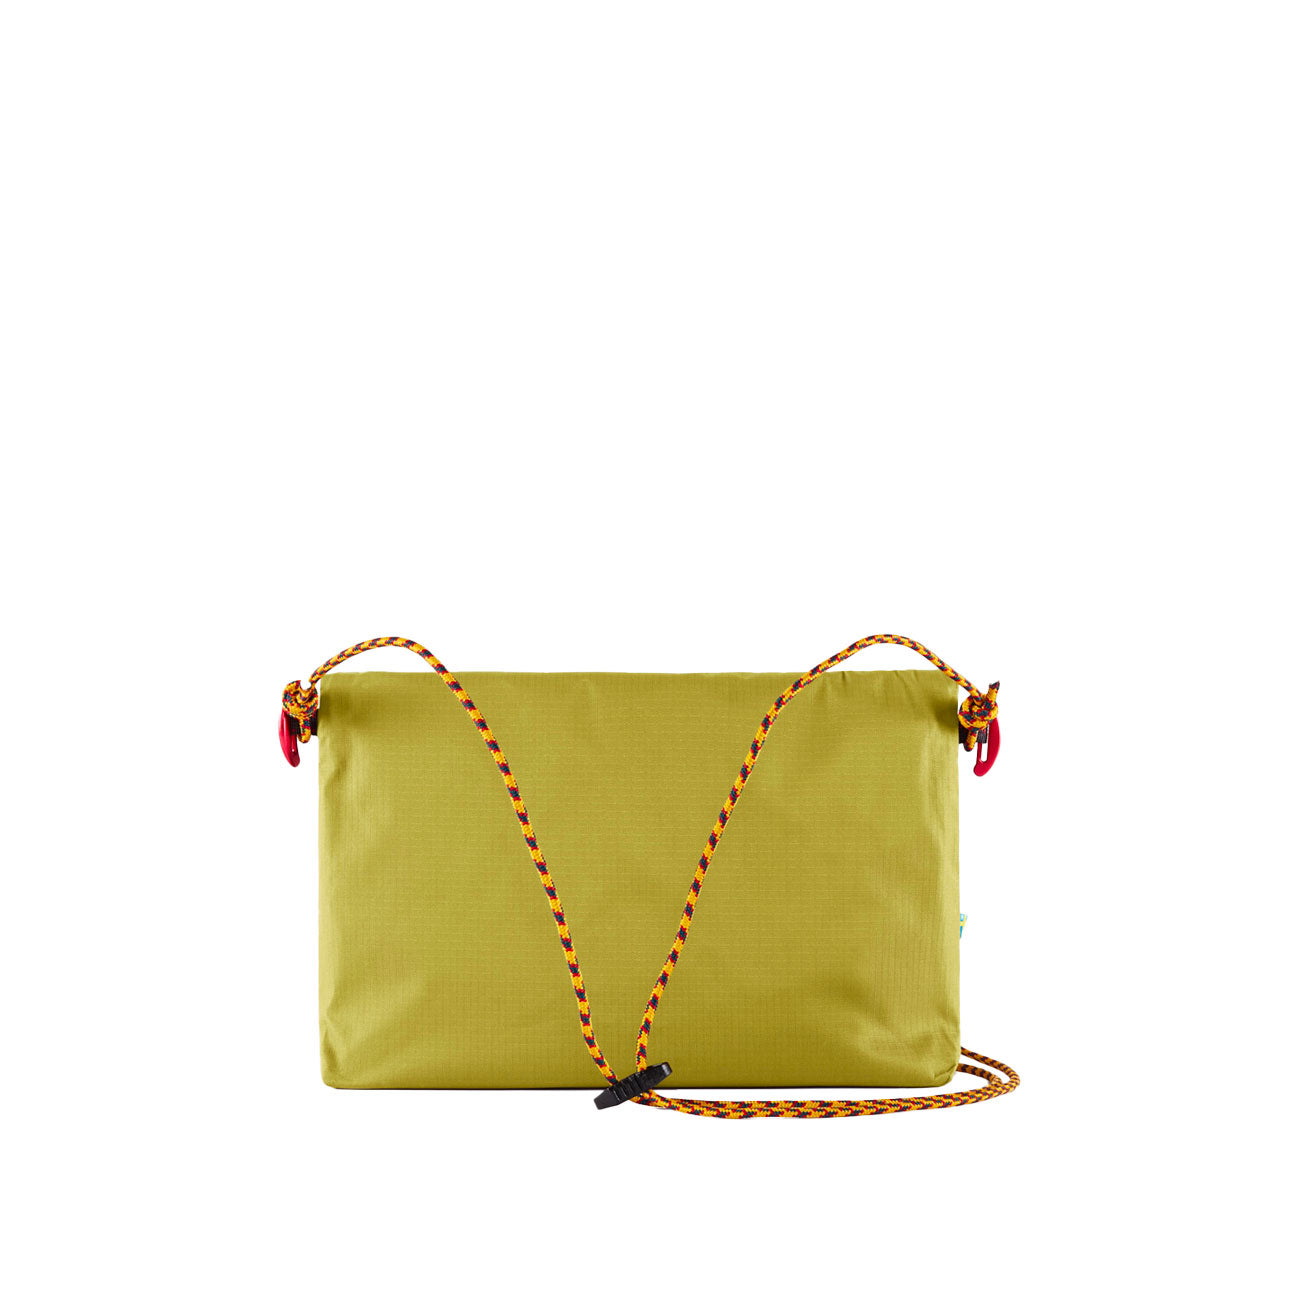 Klättermusen HRID WP 1.5L Mini Bag (Grün)  - Allike Store